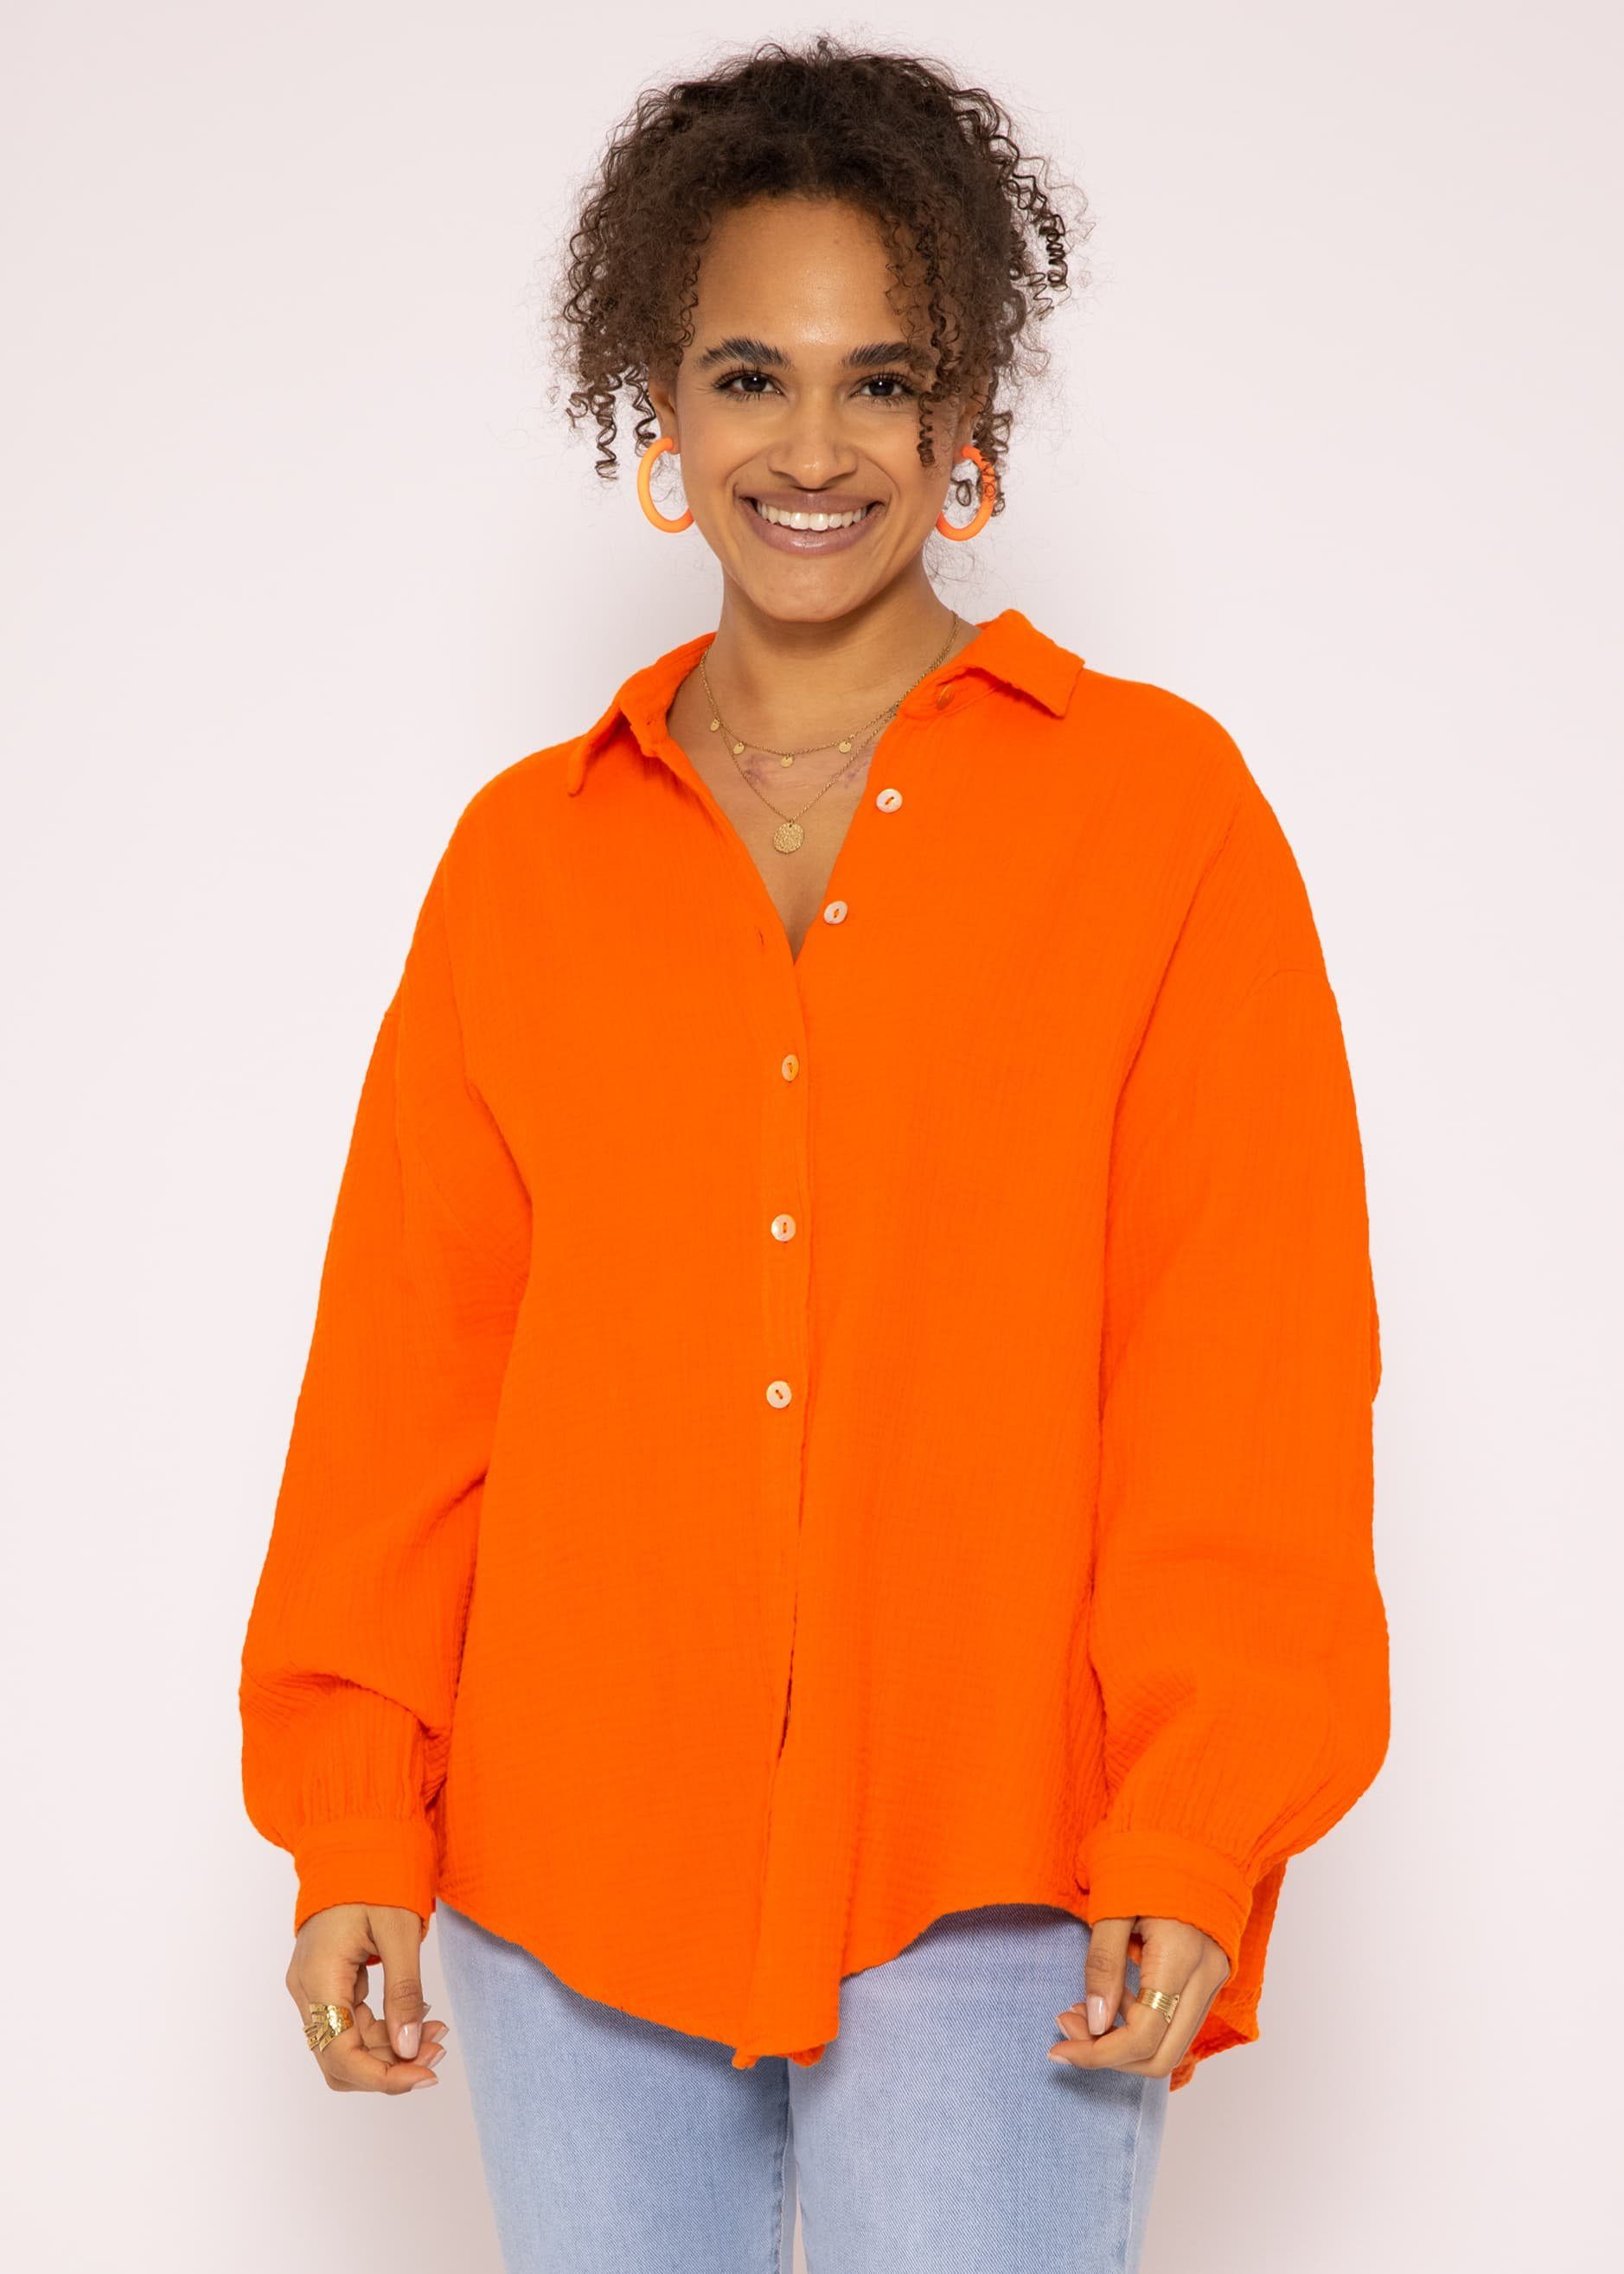 Langarm aus Hemdbluse Musselin Damen (Gr. Size 36-48) V-Ausschnitt, Longbluse lang Orange mit One Bluse Baumwolle SASSYCLASSY Oversize